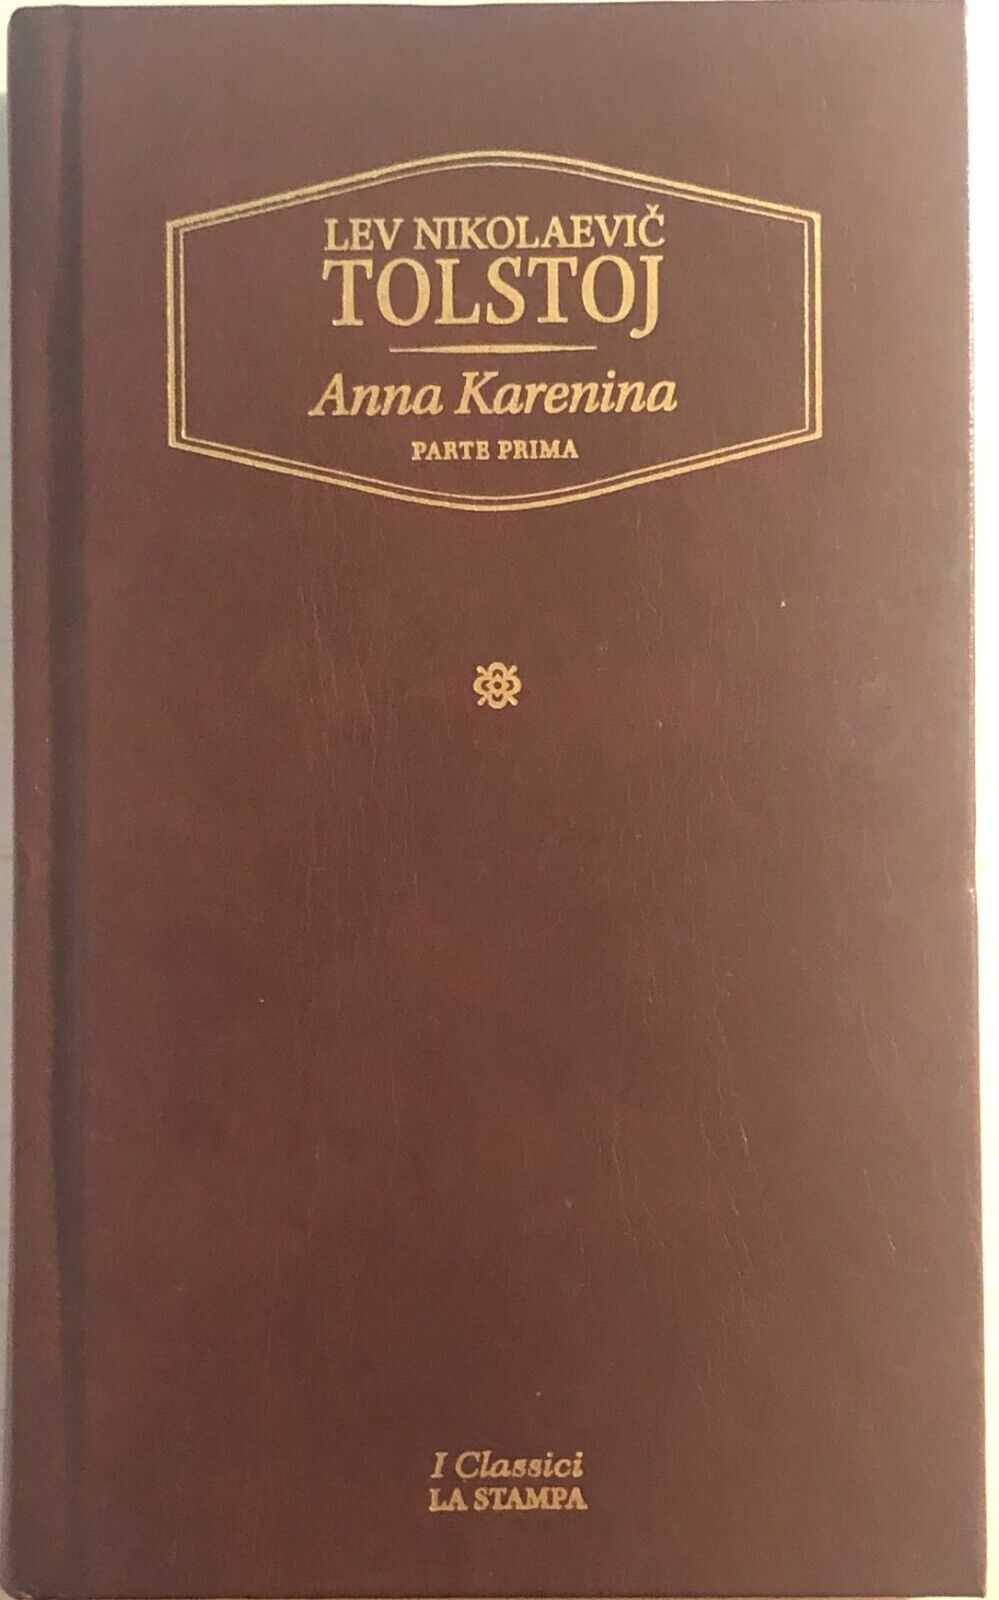 Anna Karenina parte prima di Lev Tolstoj, 2003, La Stampa